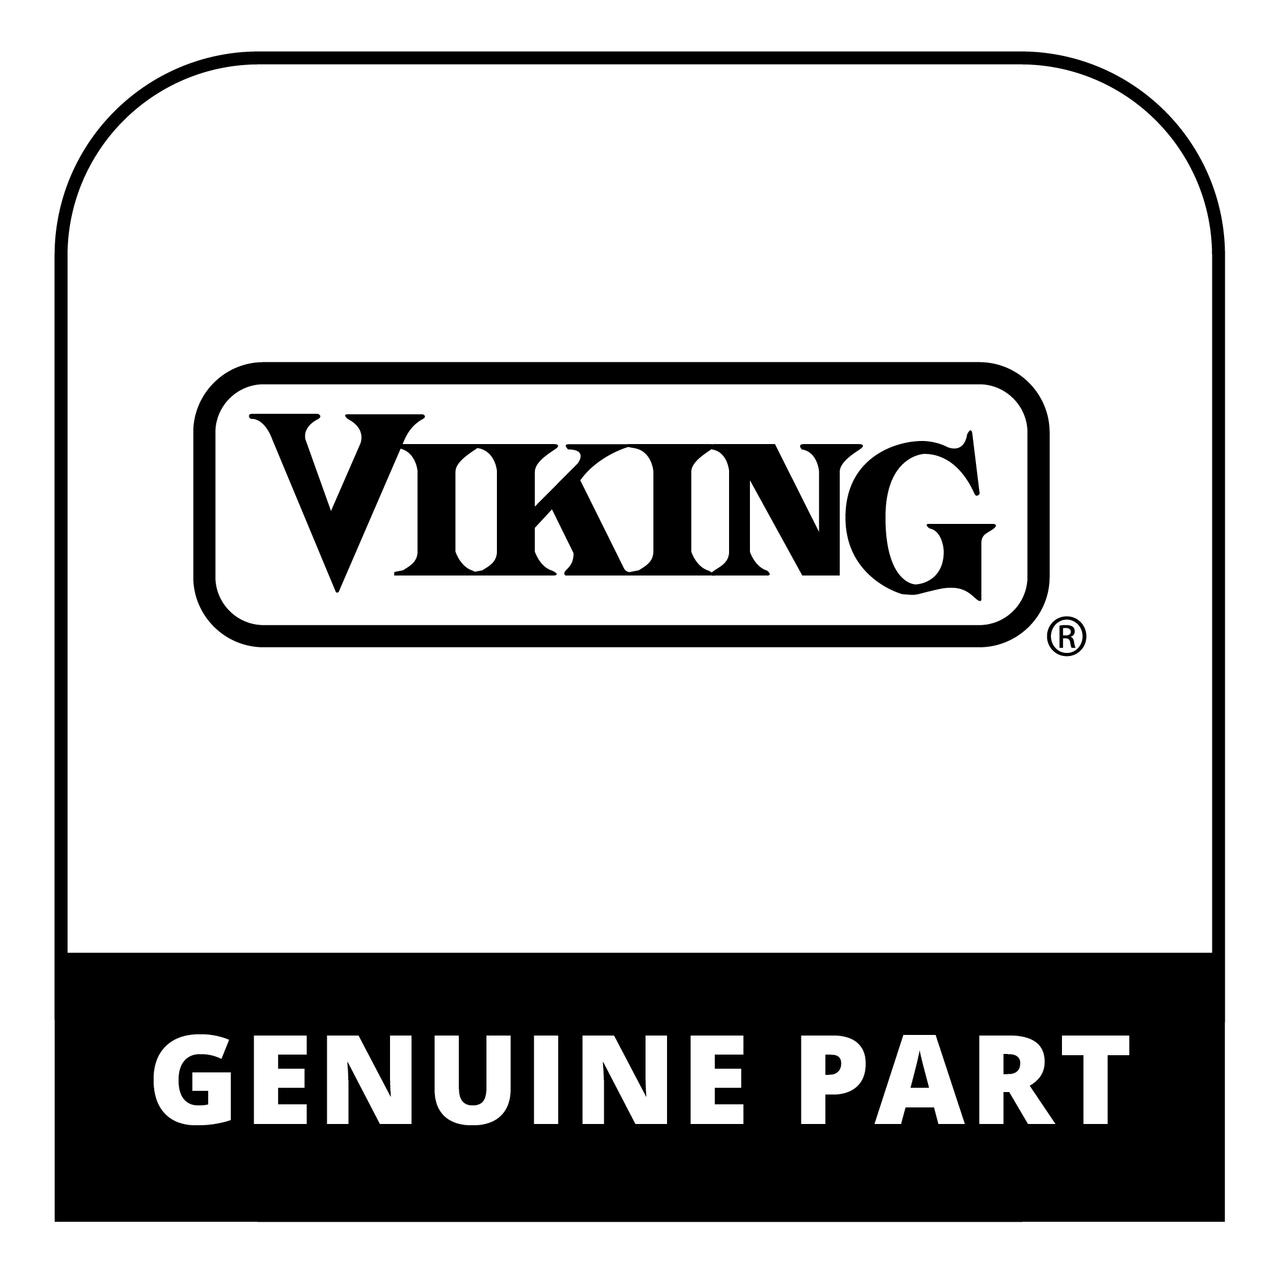 Viking 083573-6797 - Vsof7301 Door Heat And Condensation Kit - Genuine Viking Part